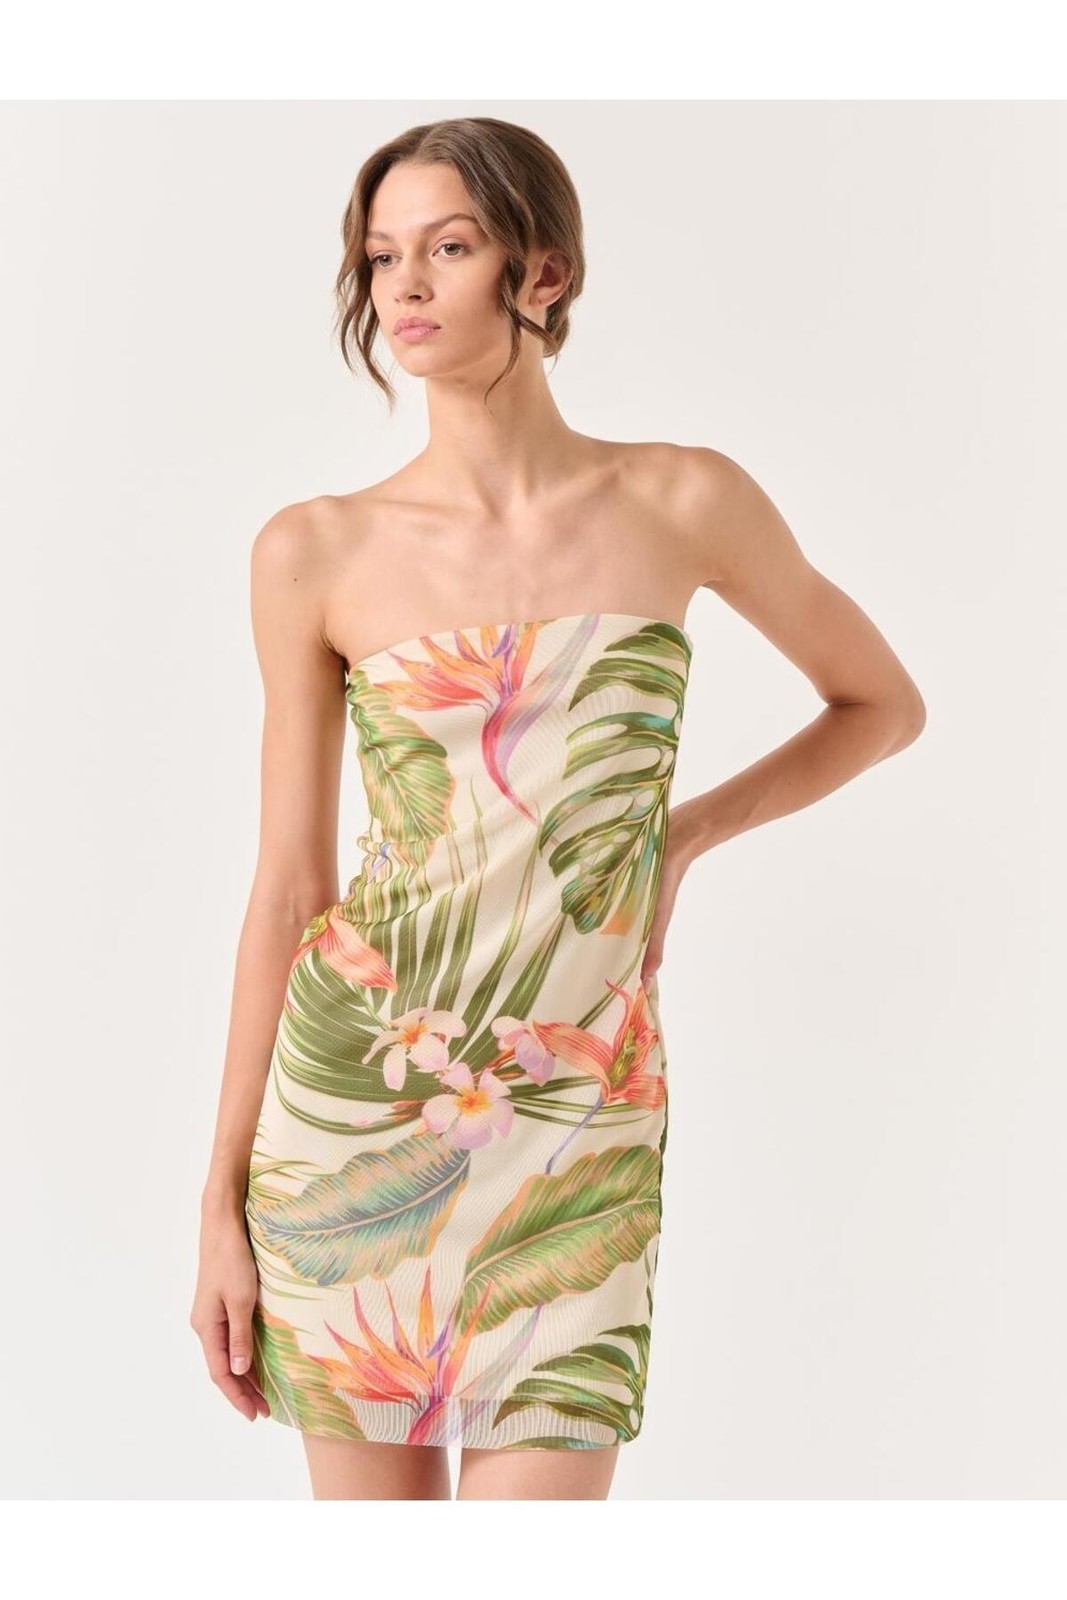 Jimmy Key Sage Green Strapless Tropical Patterned Mini Dress